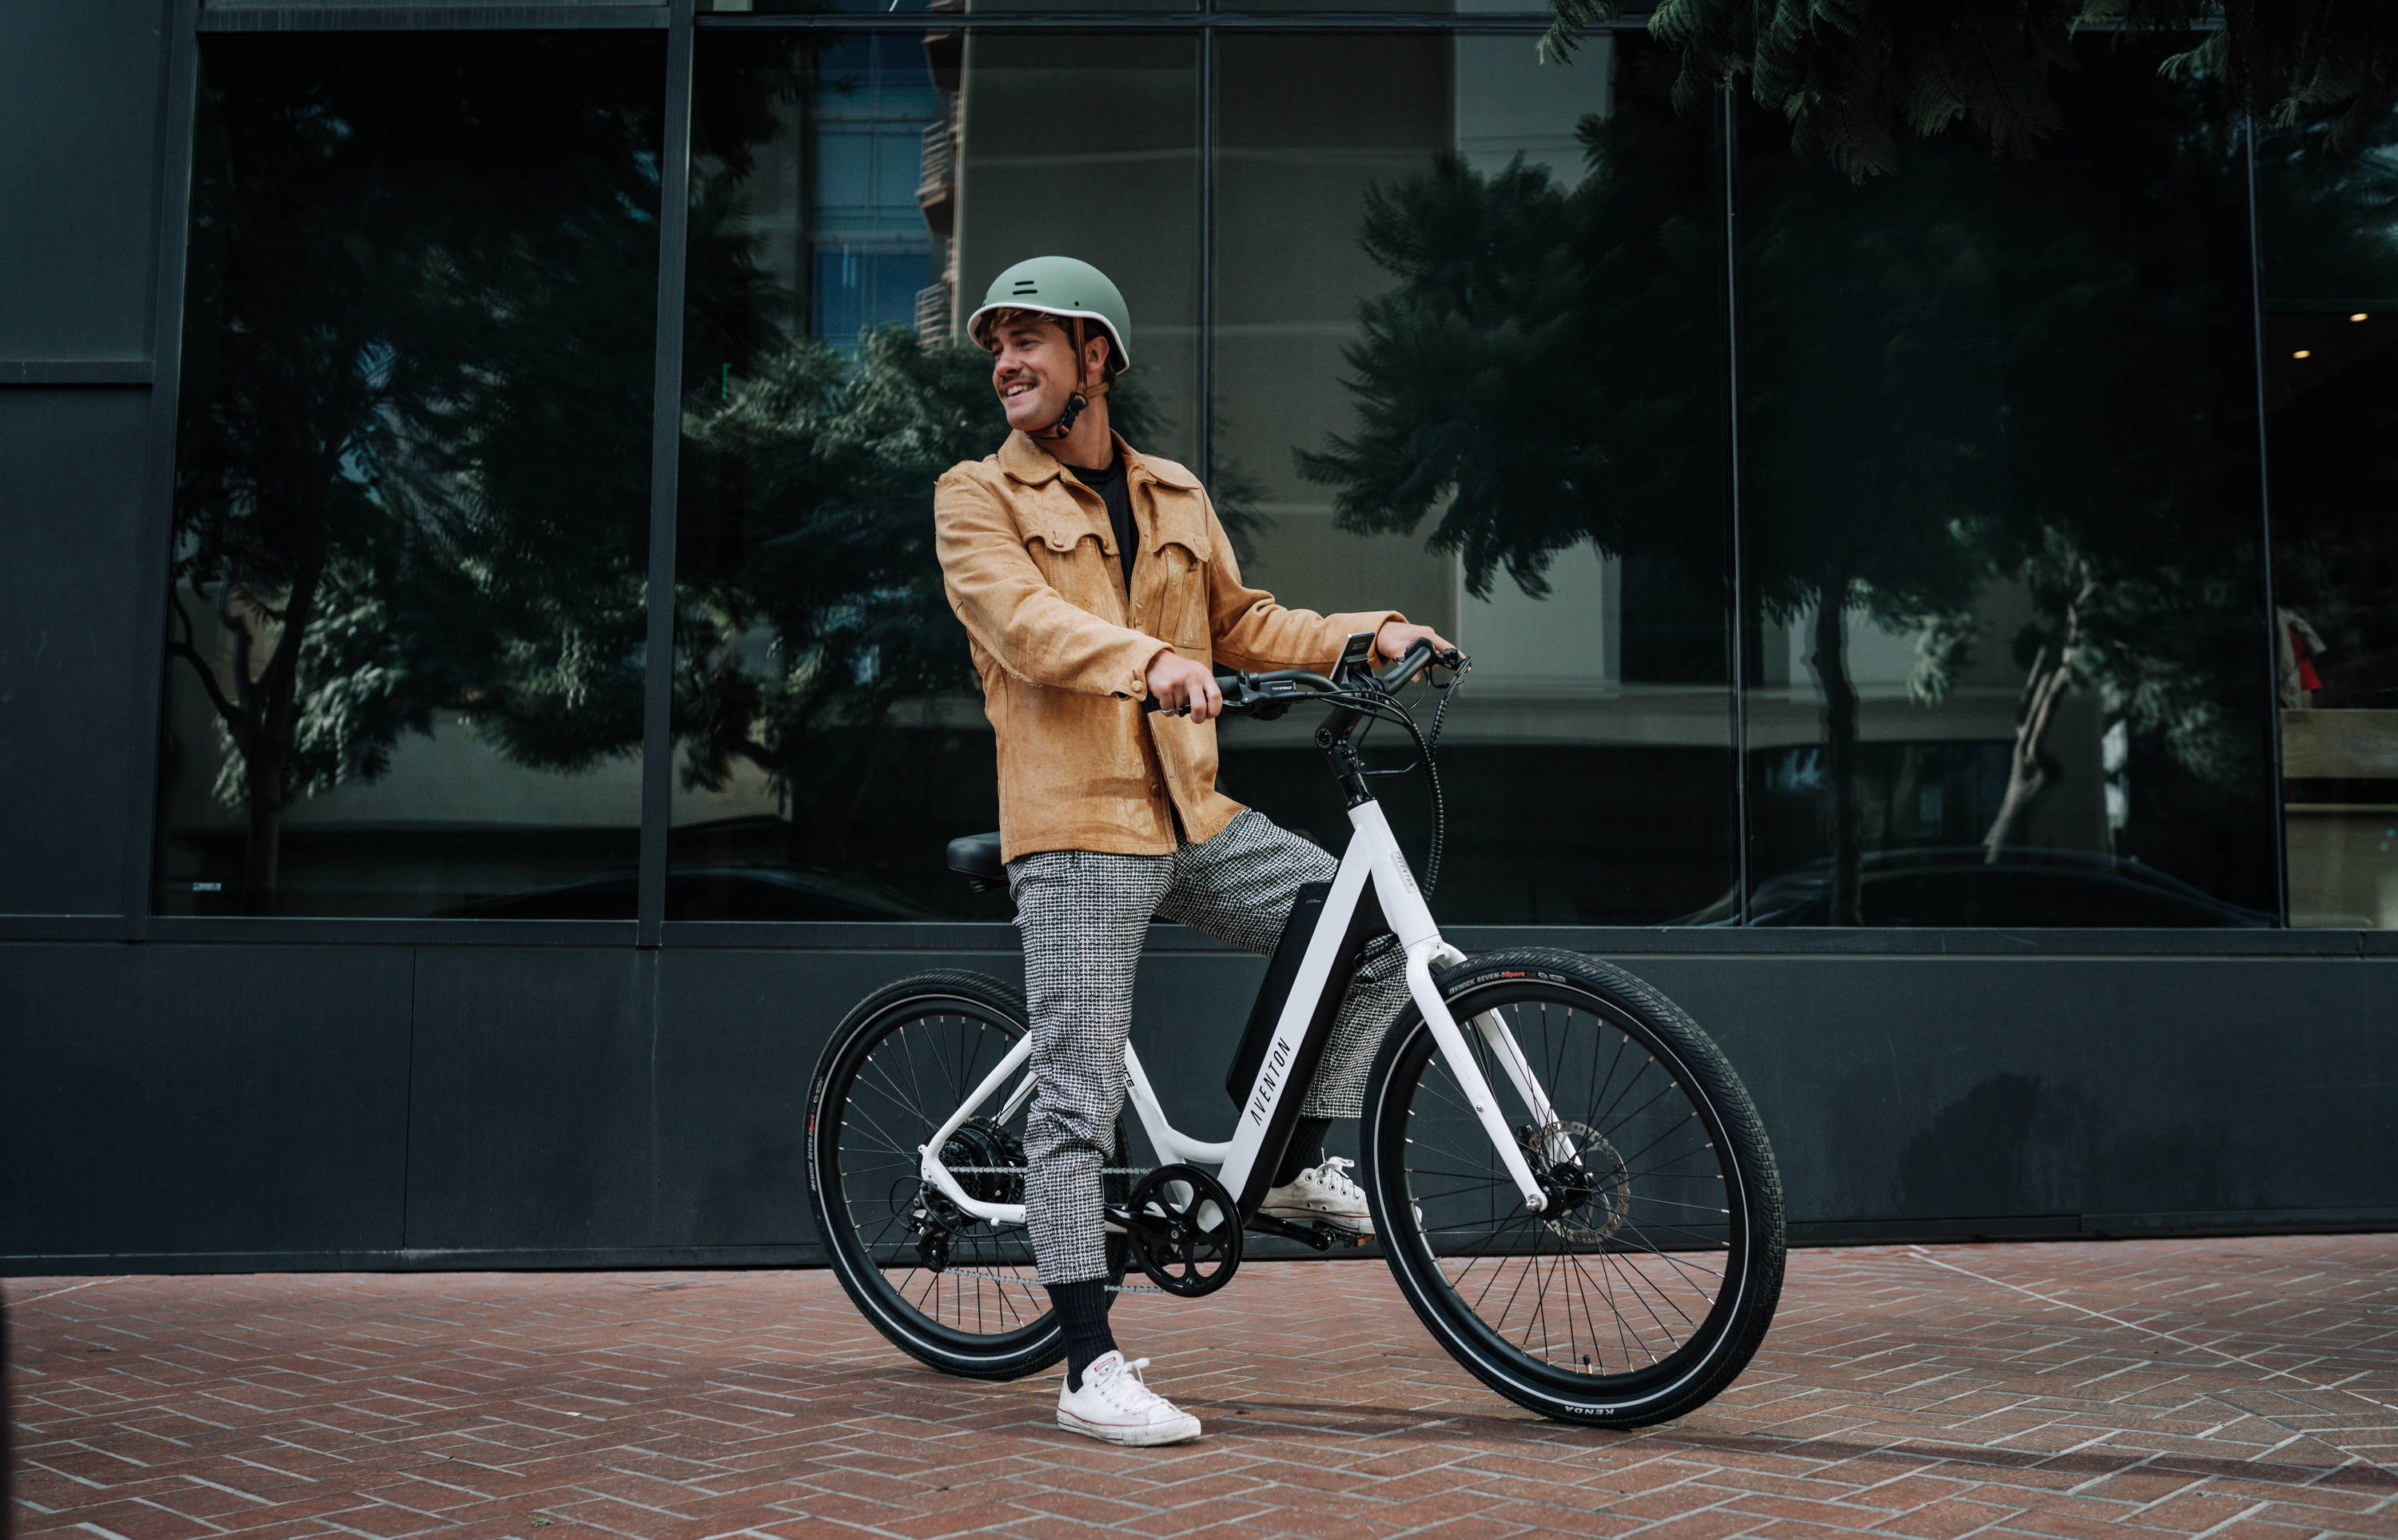 Electric Bike Attire: What To Wear When Biking